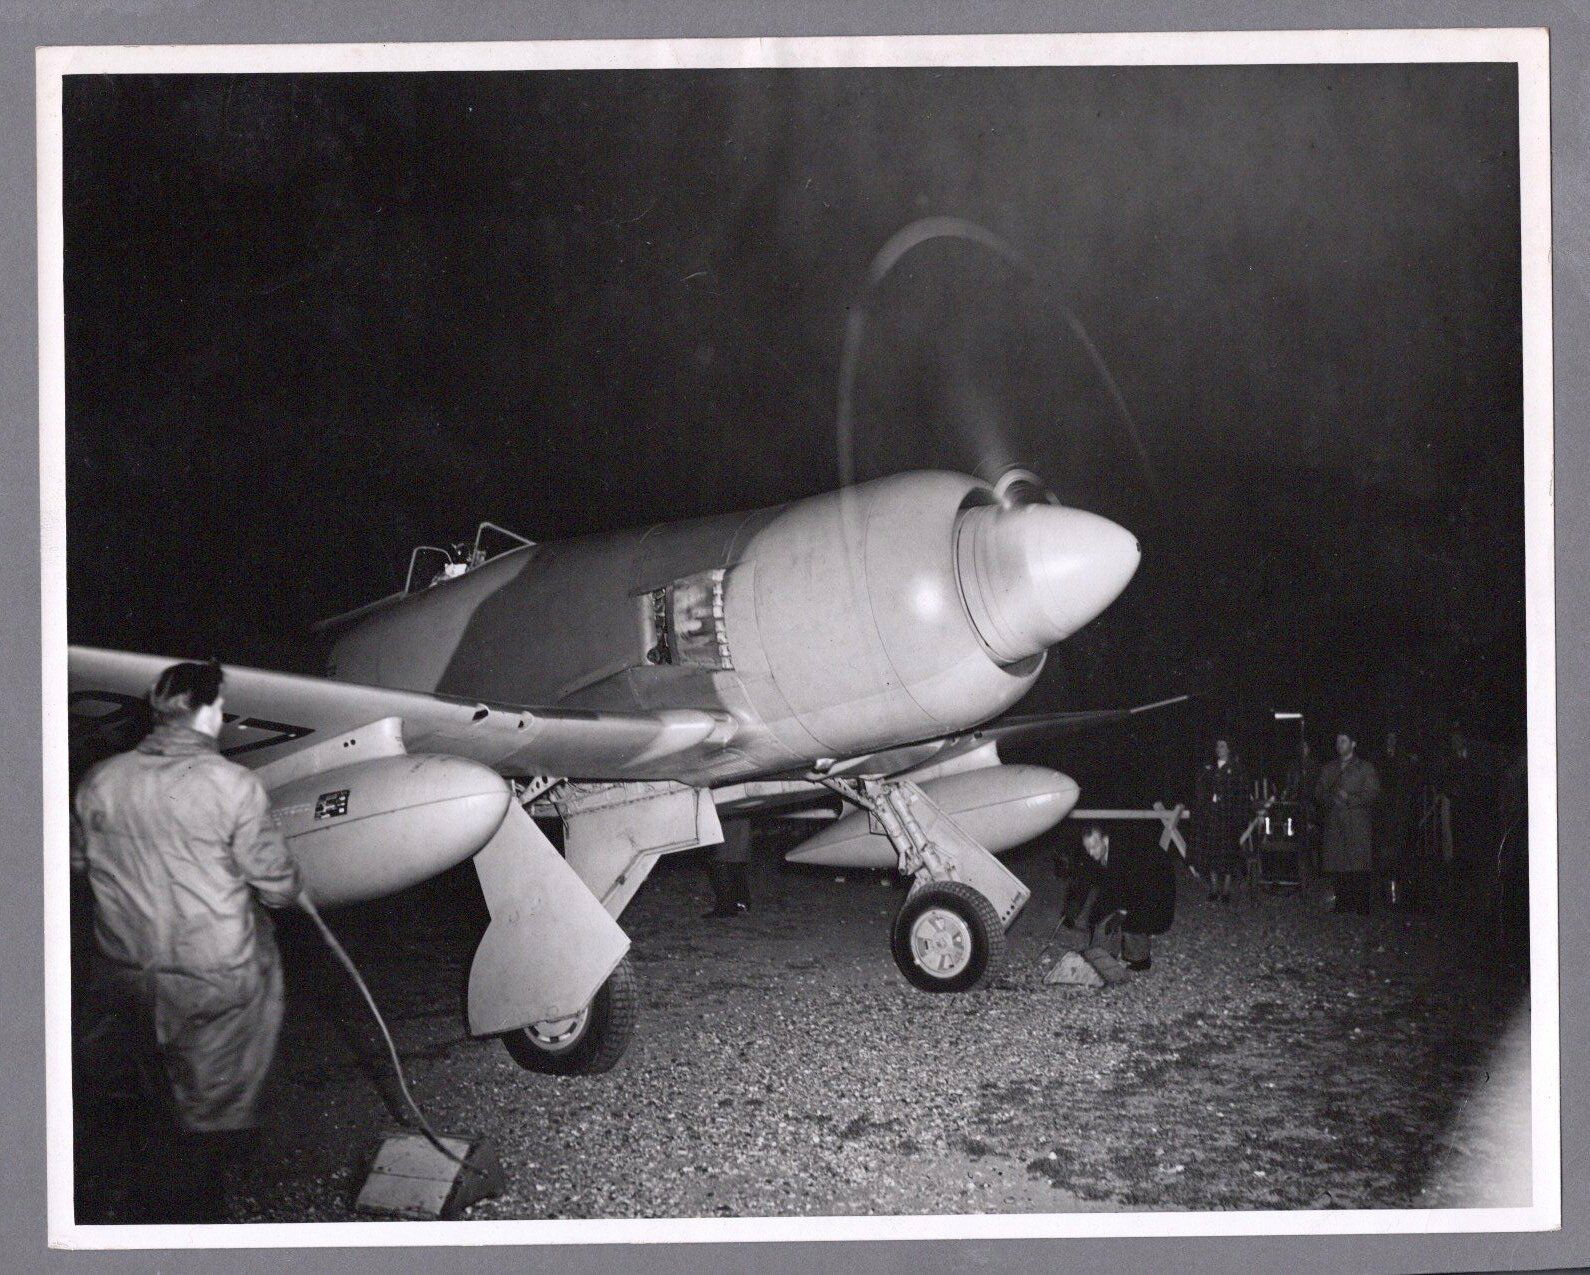 Hawker-Sea-Fury-Large-Original-Vintage-Press-Photo.jpg